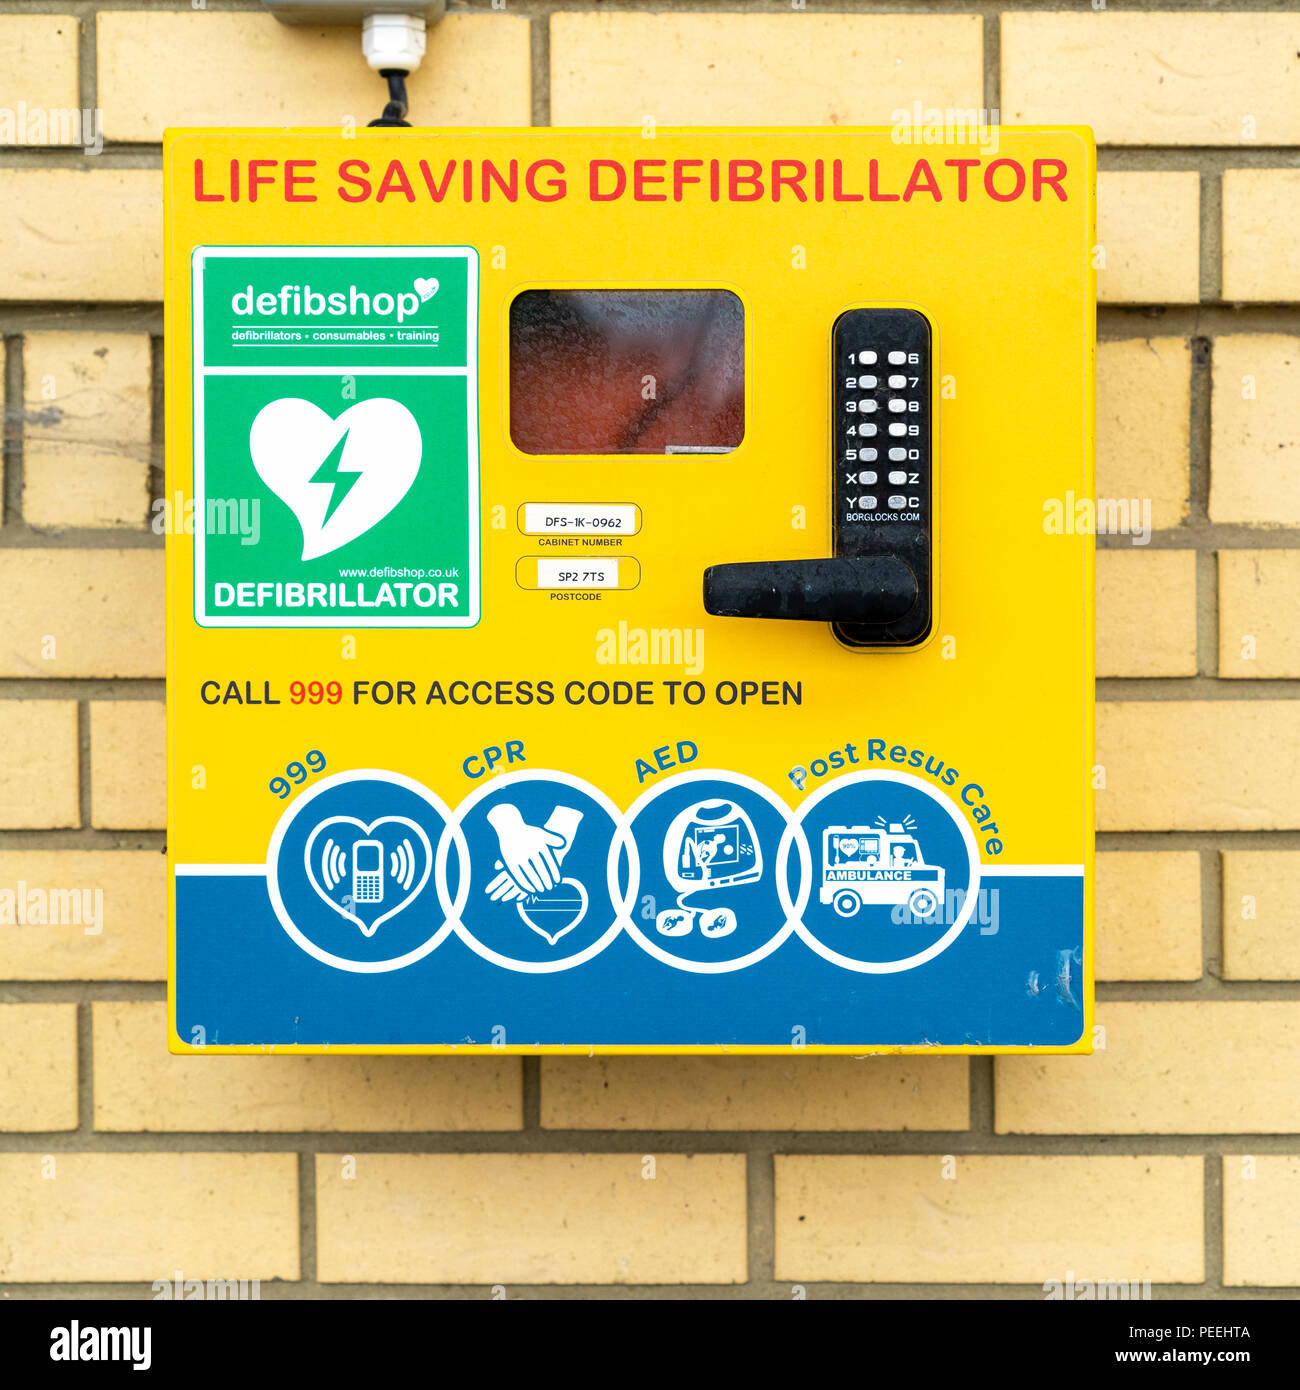 Defibrillator in public place Stock Photo